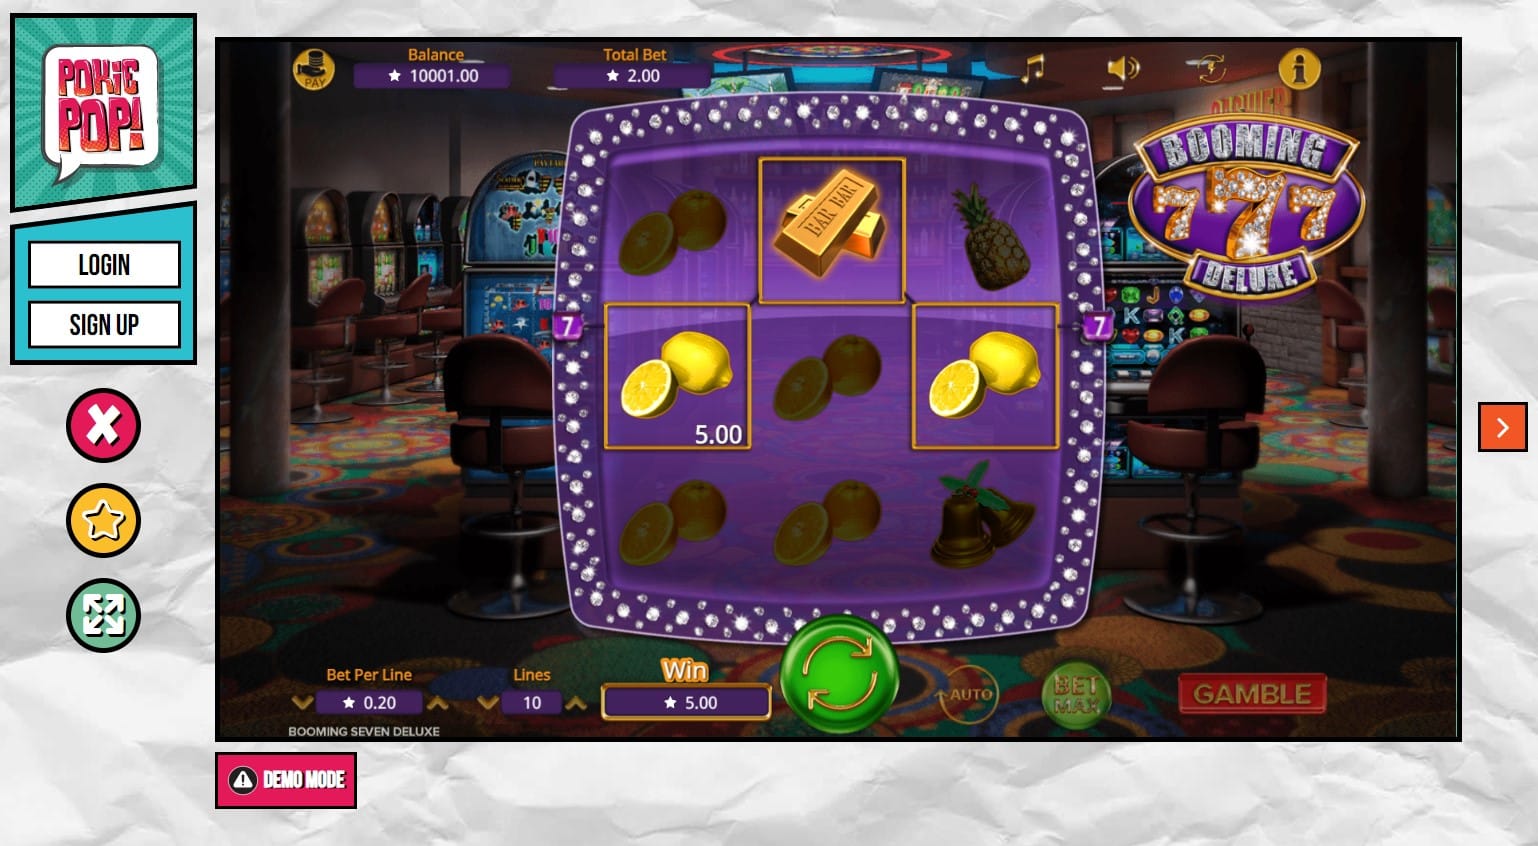 pokiepop casino slot